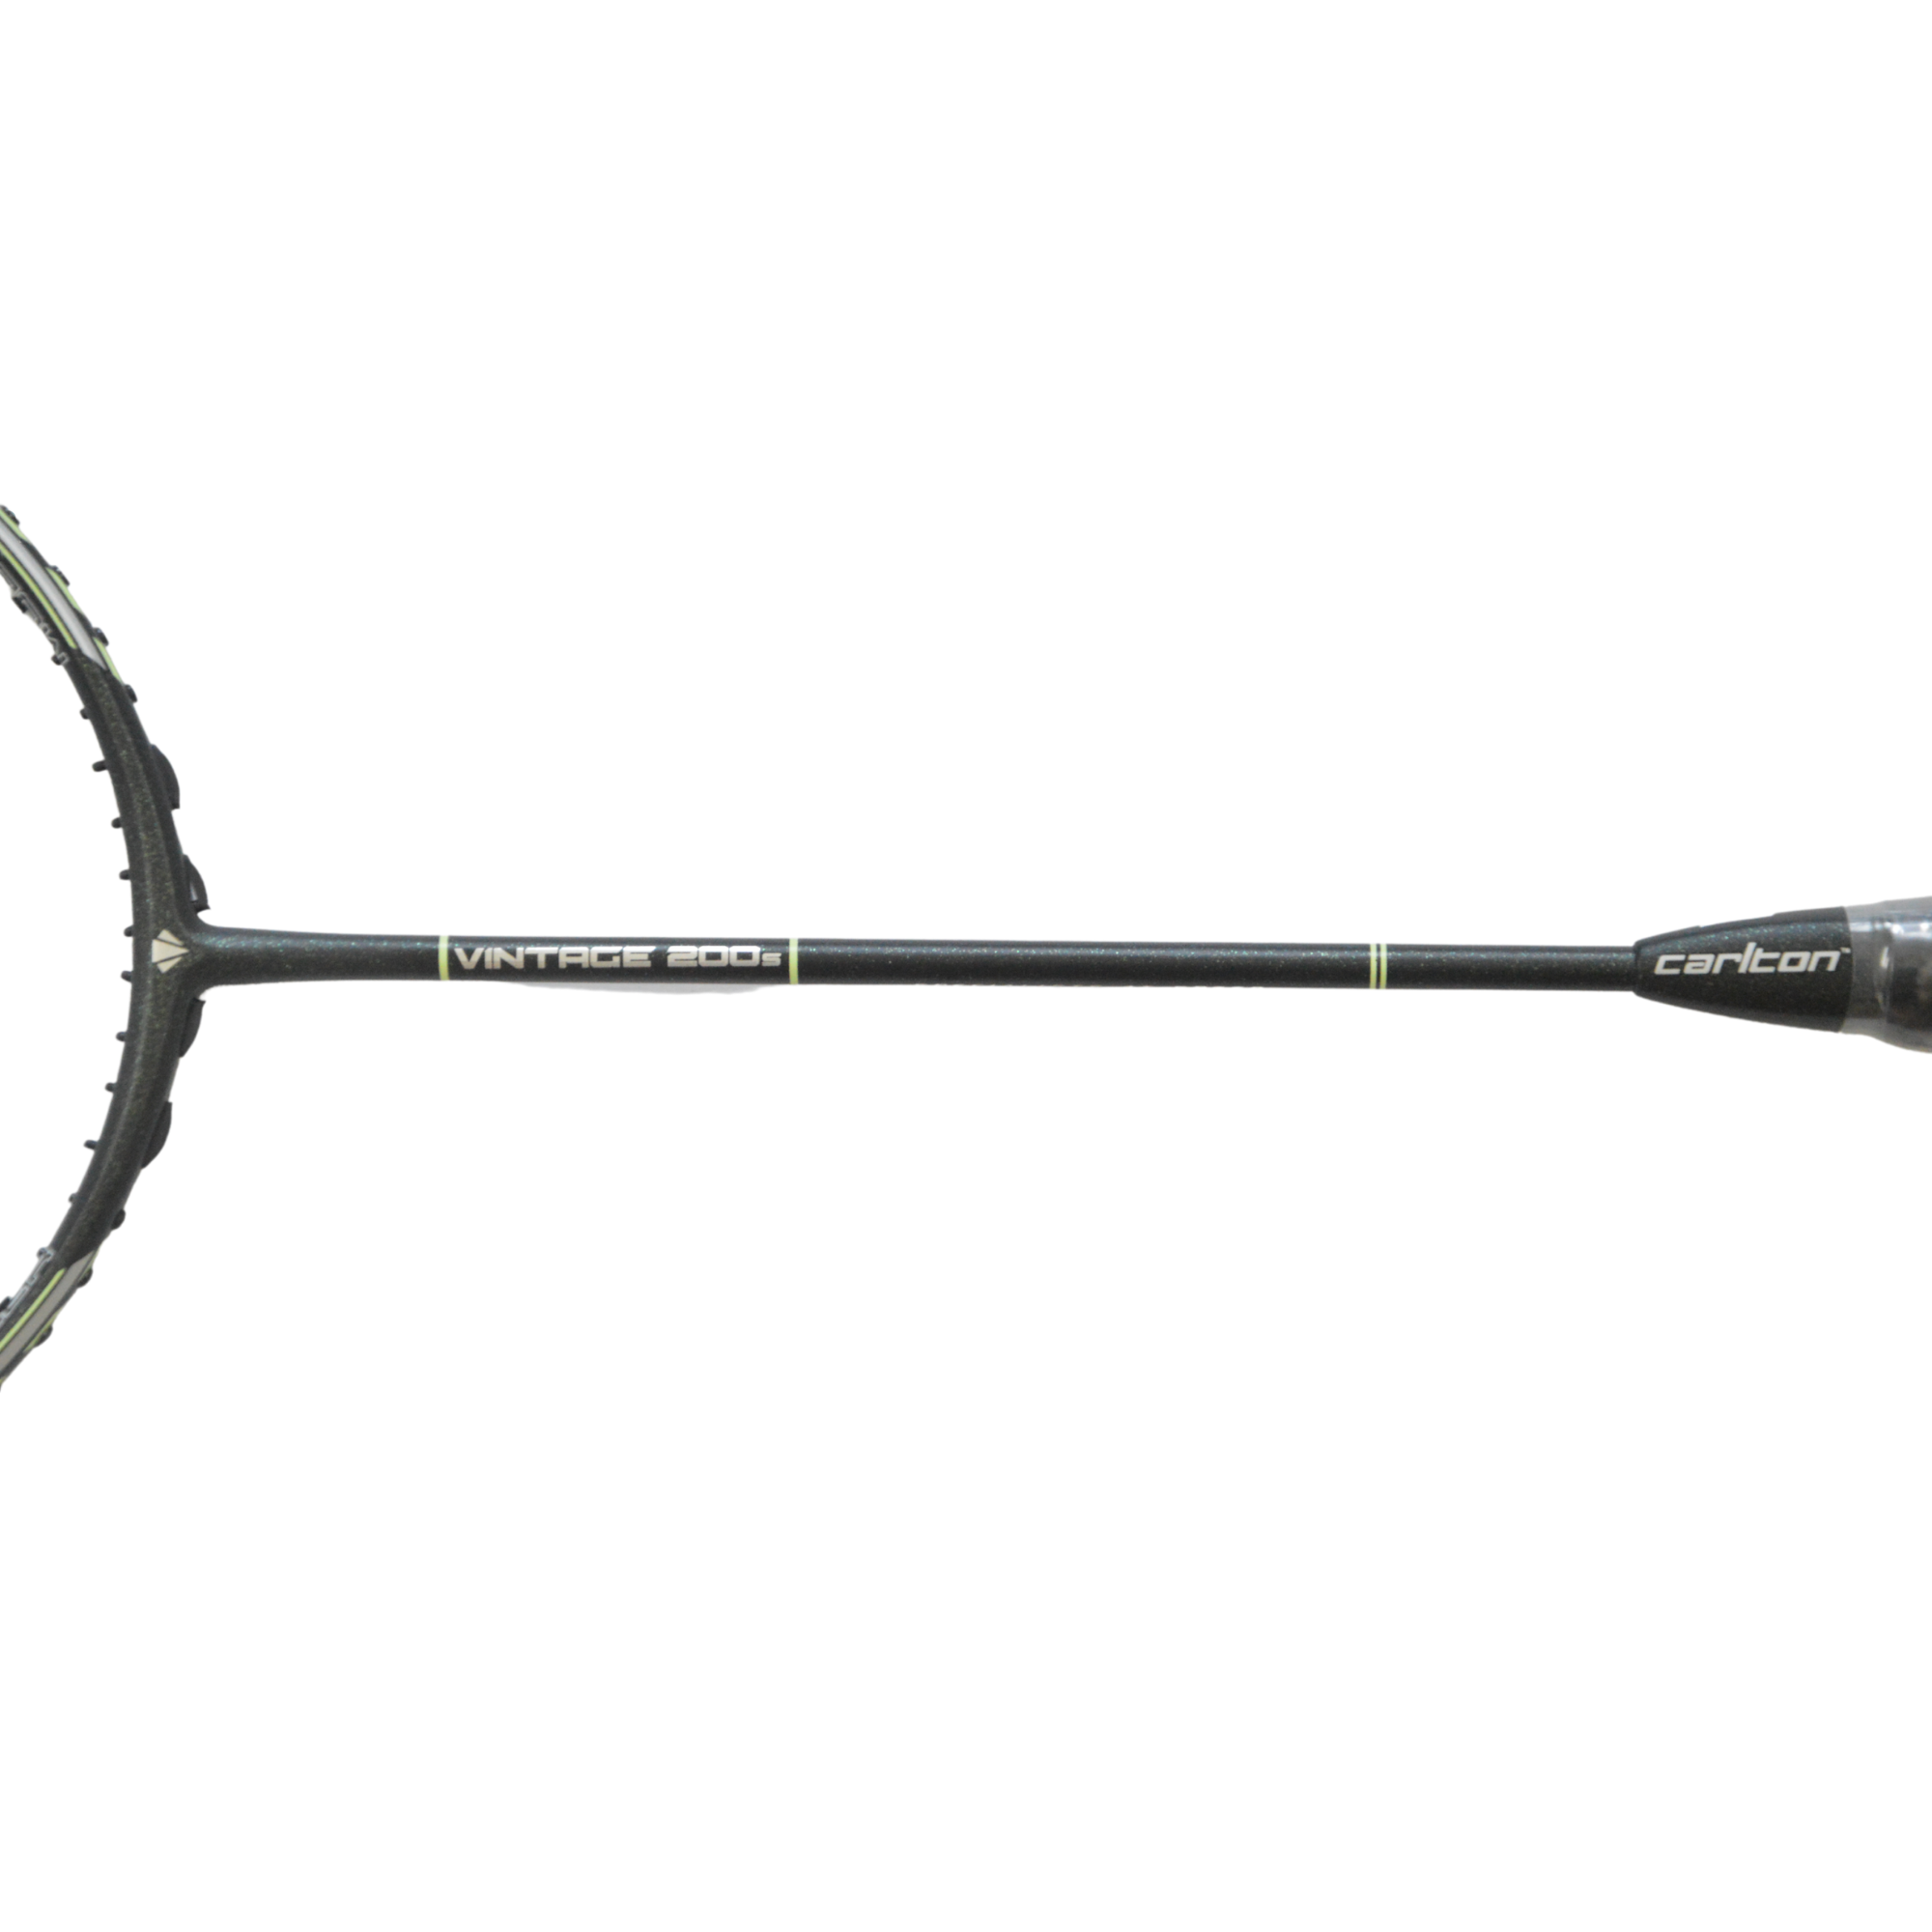 Carlton Vintage 200s Unstrung Badminton Racket